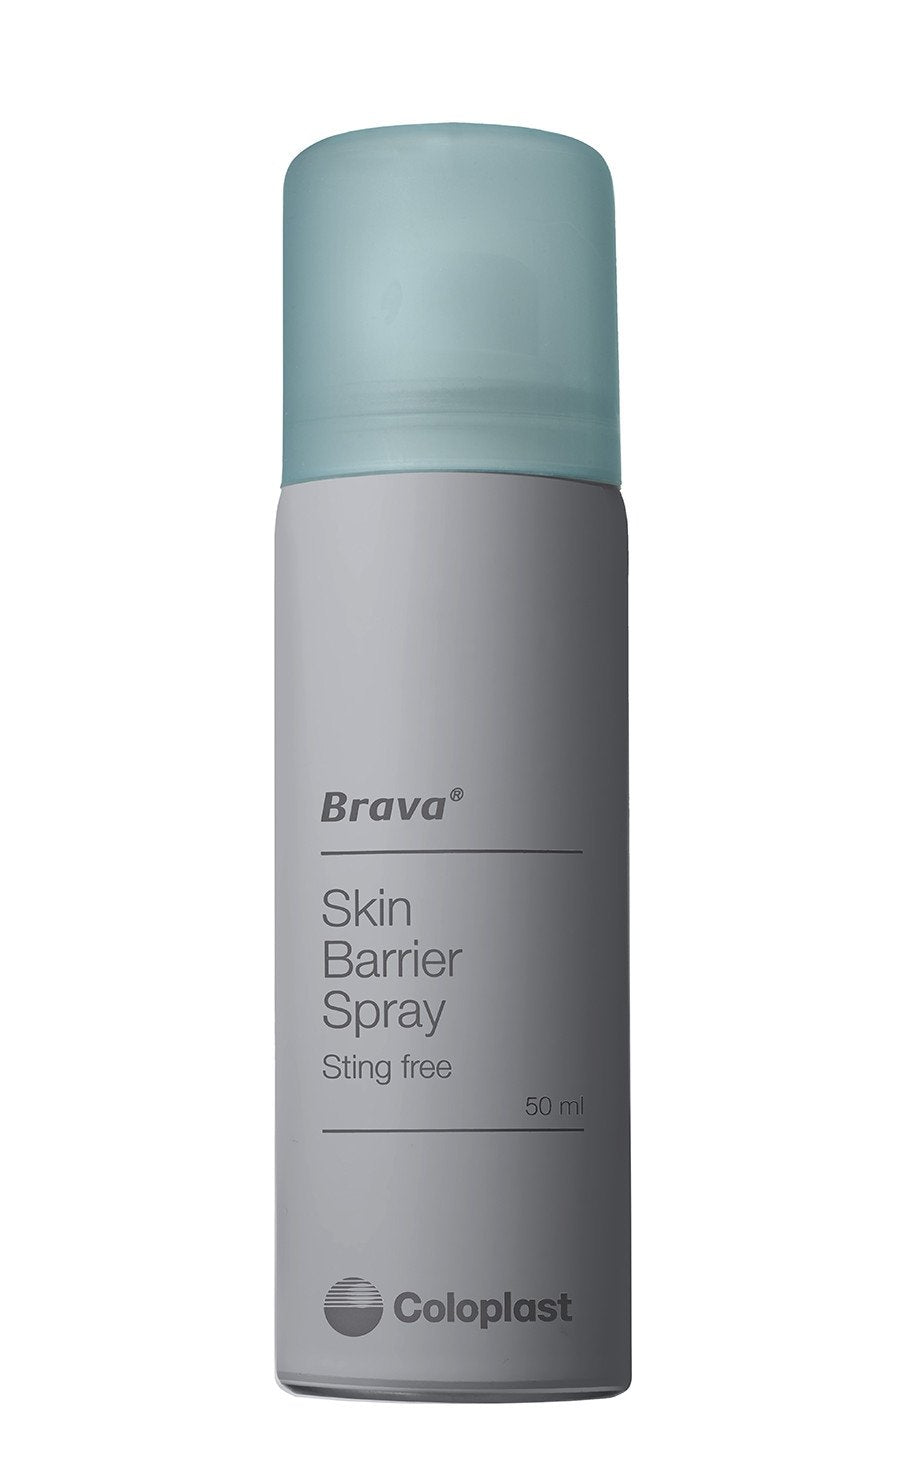 Coloplast Brava® Skin Barrier Spray at Meridian Medical Supply